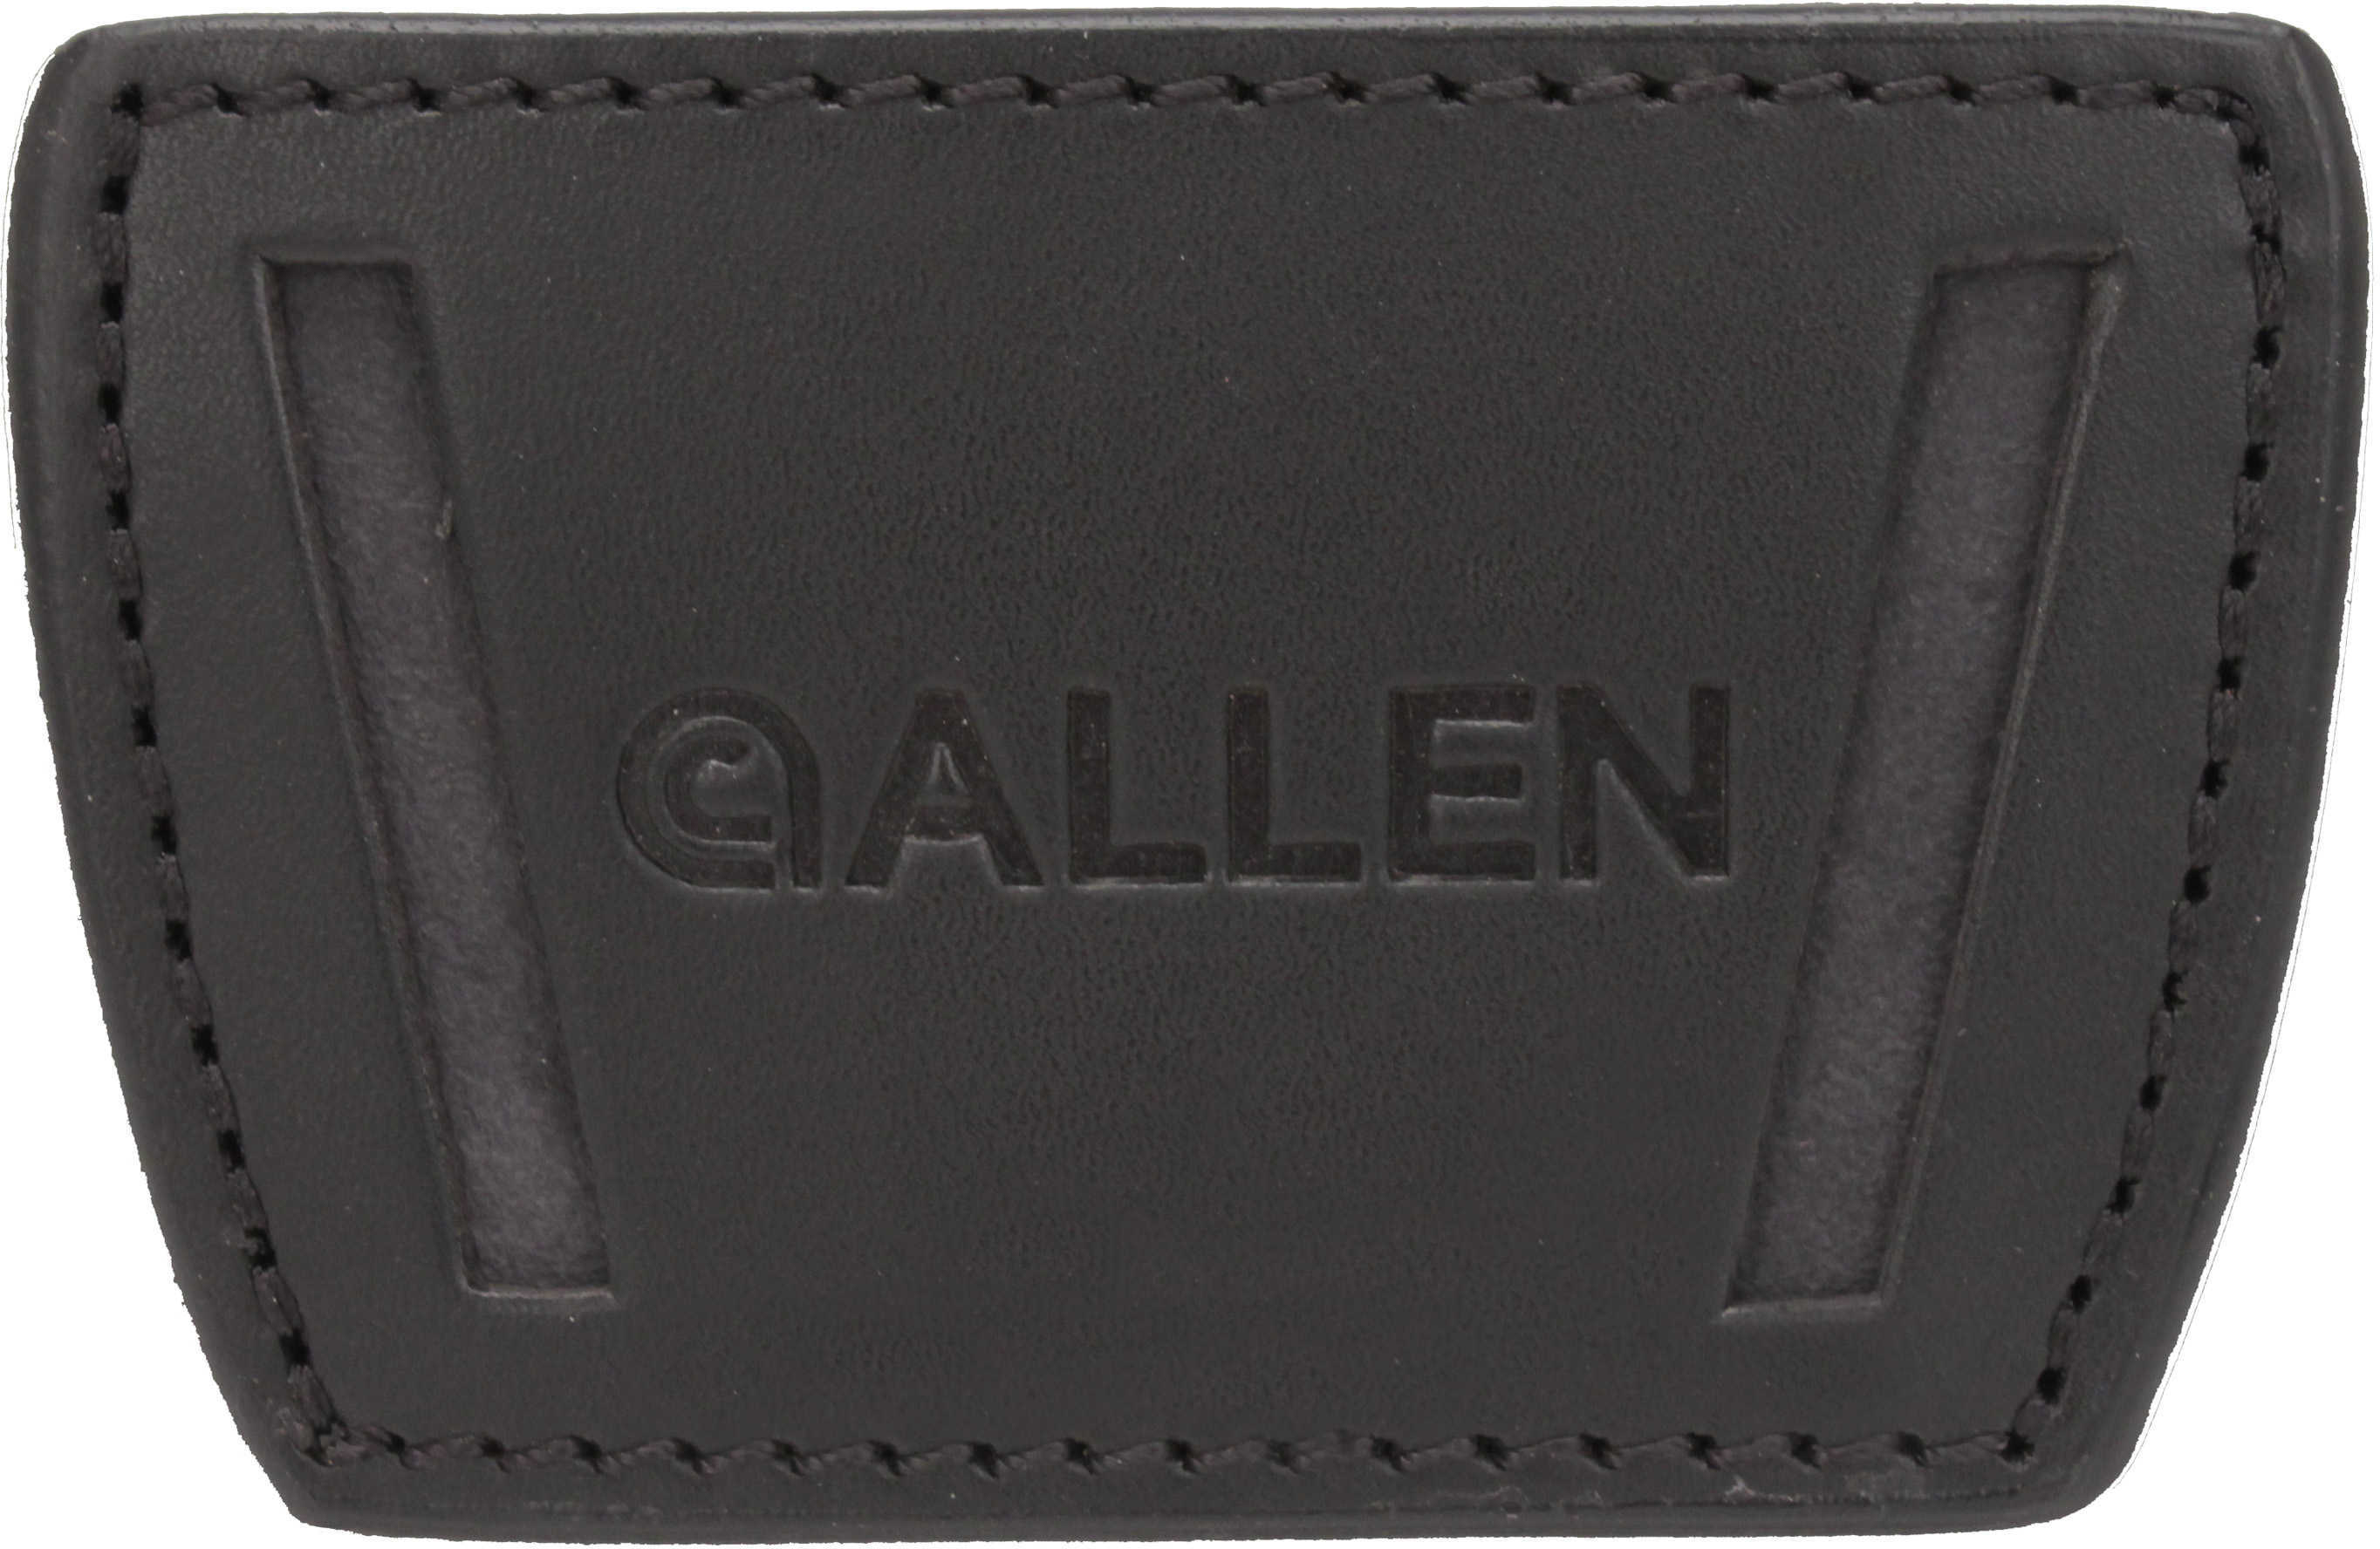 Allen Belt Slide Holster AMBI Leather Small Frame Autos Black